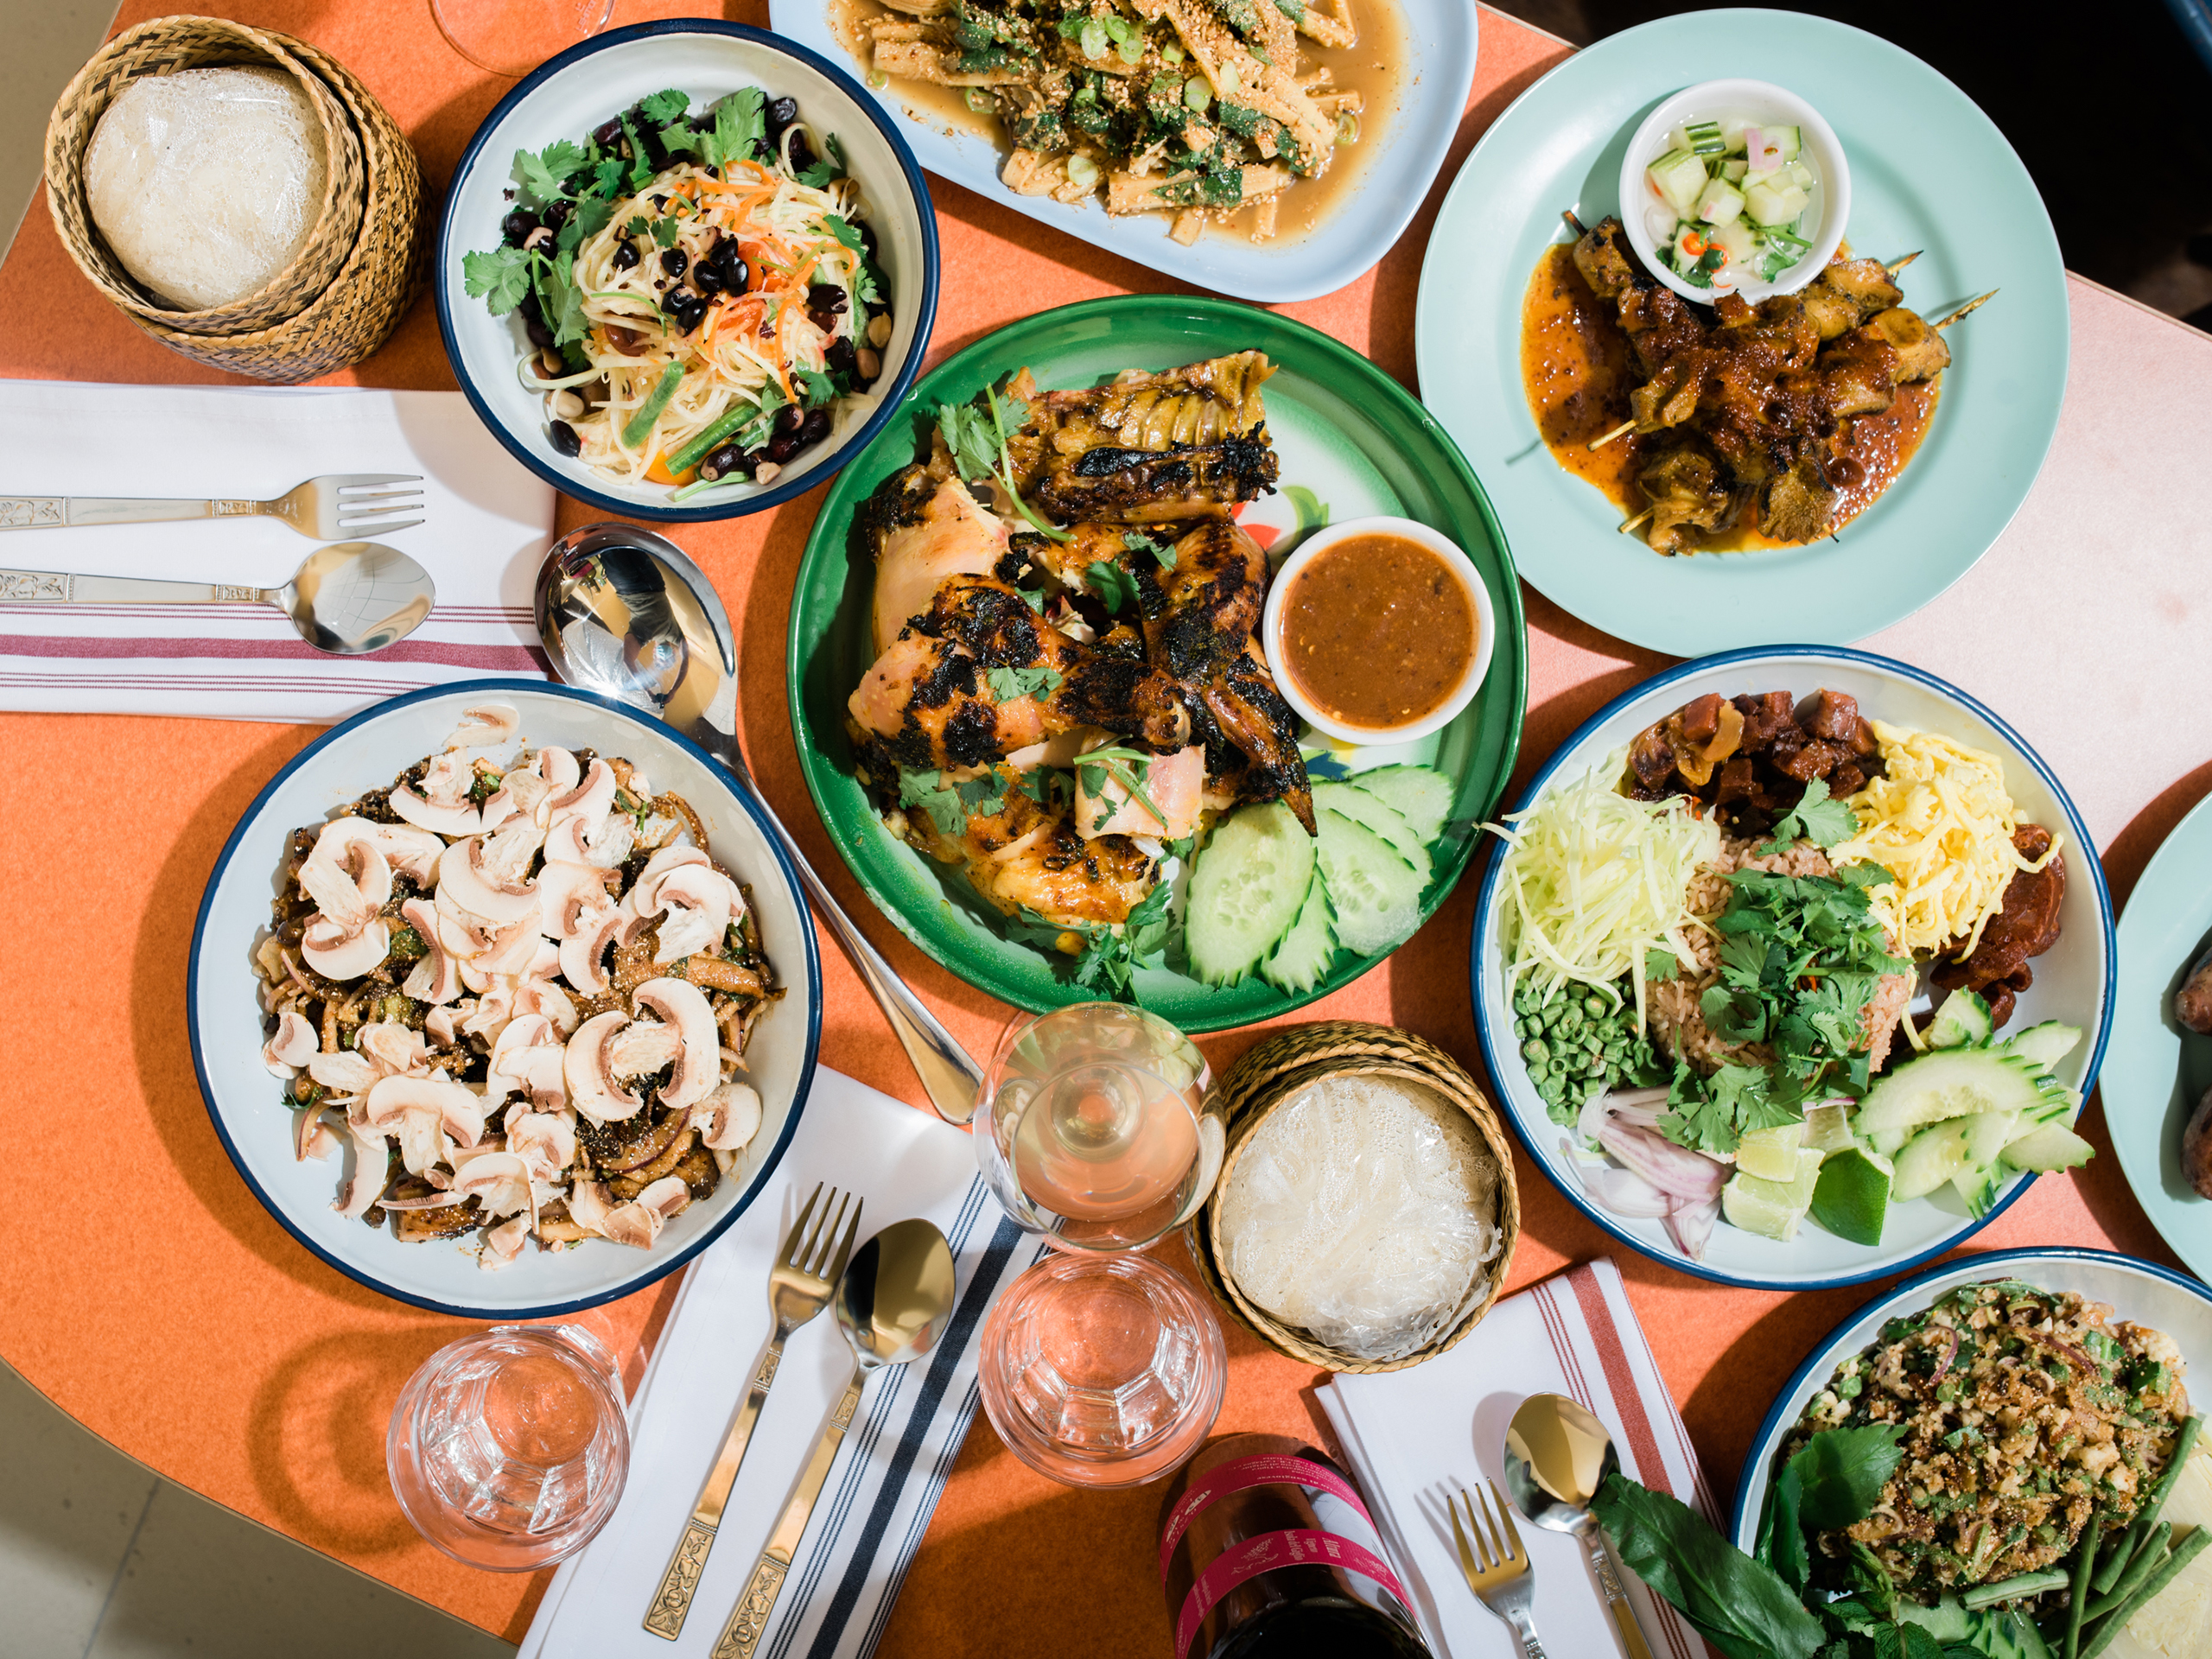 pichai&#x27;s delicious Thai offerings spread across plates on an orange table